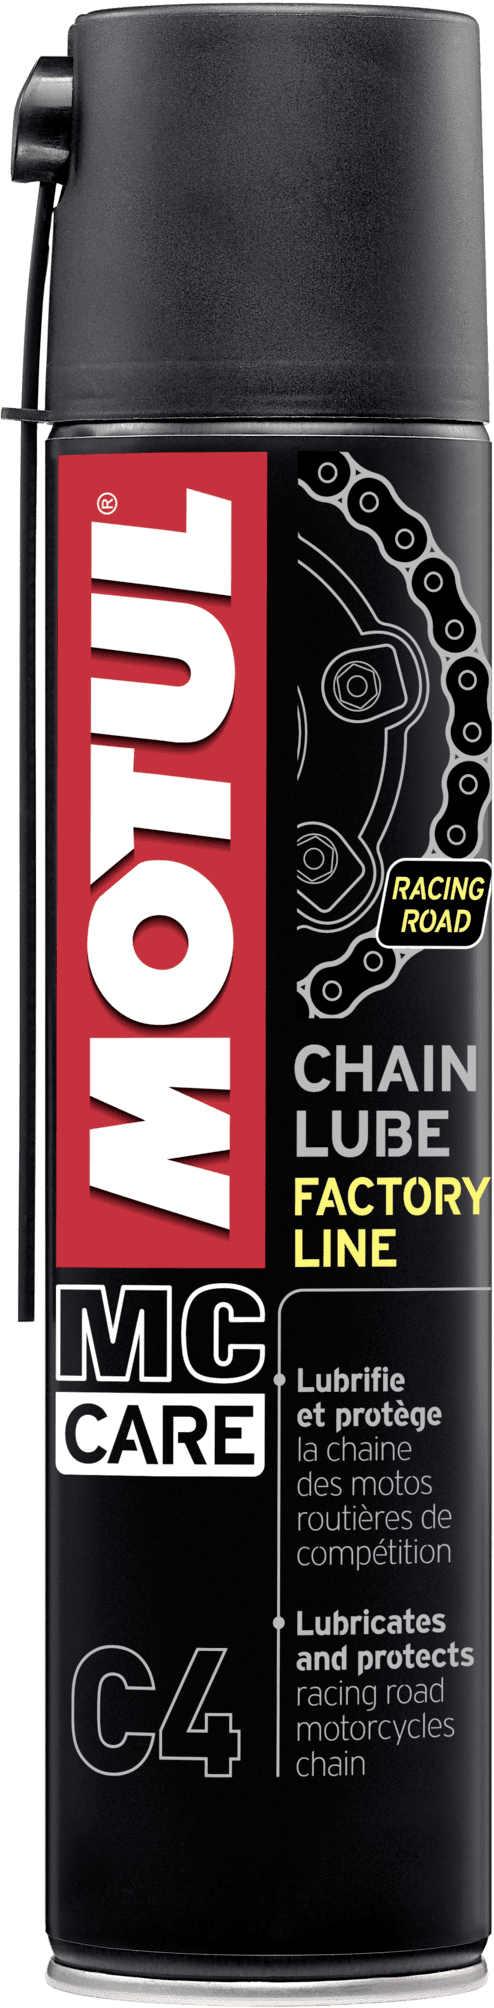 Motul MC Care C4 Chain Lube Factory Line, 400 ml